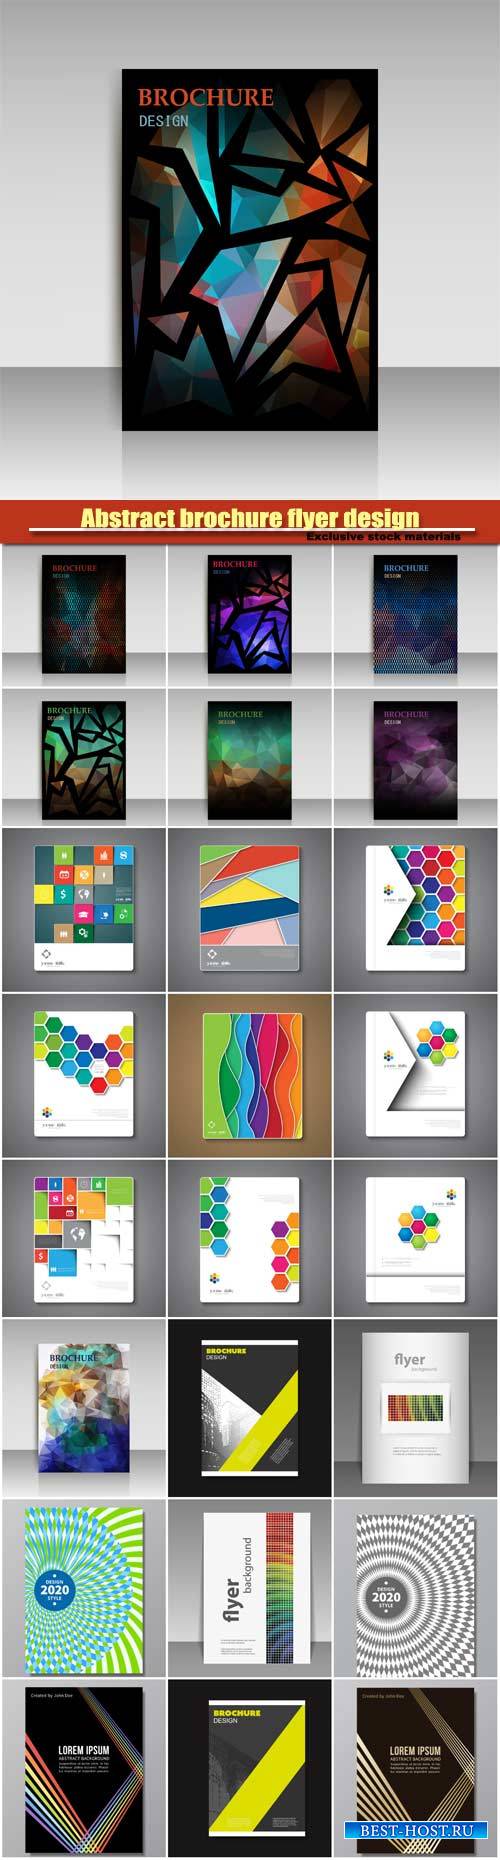 Abstract brochure flyer design in geometric design